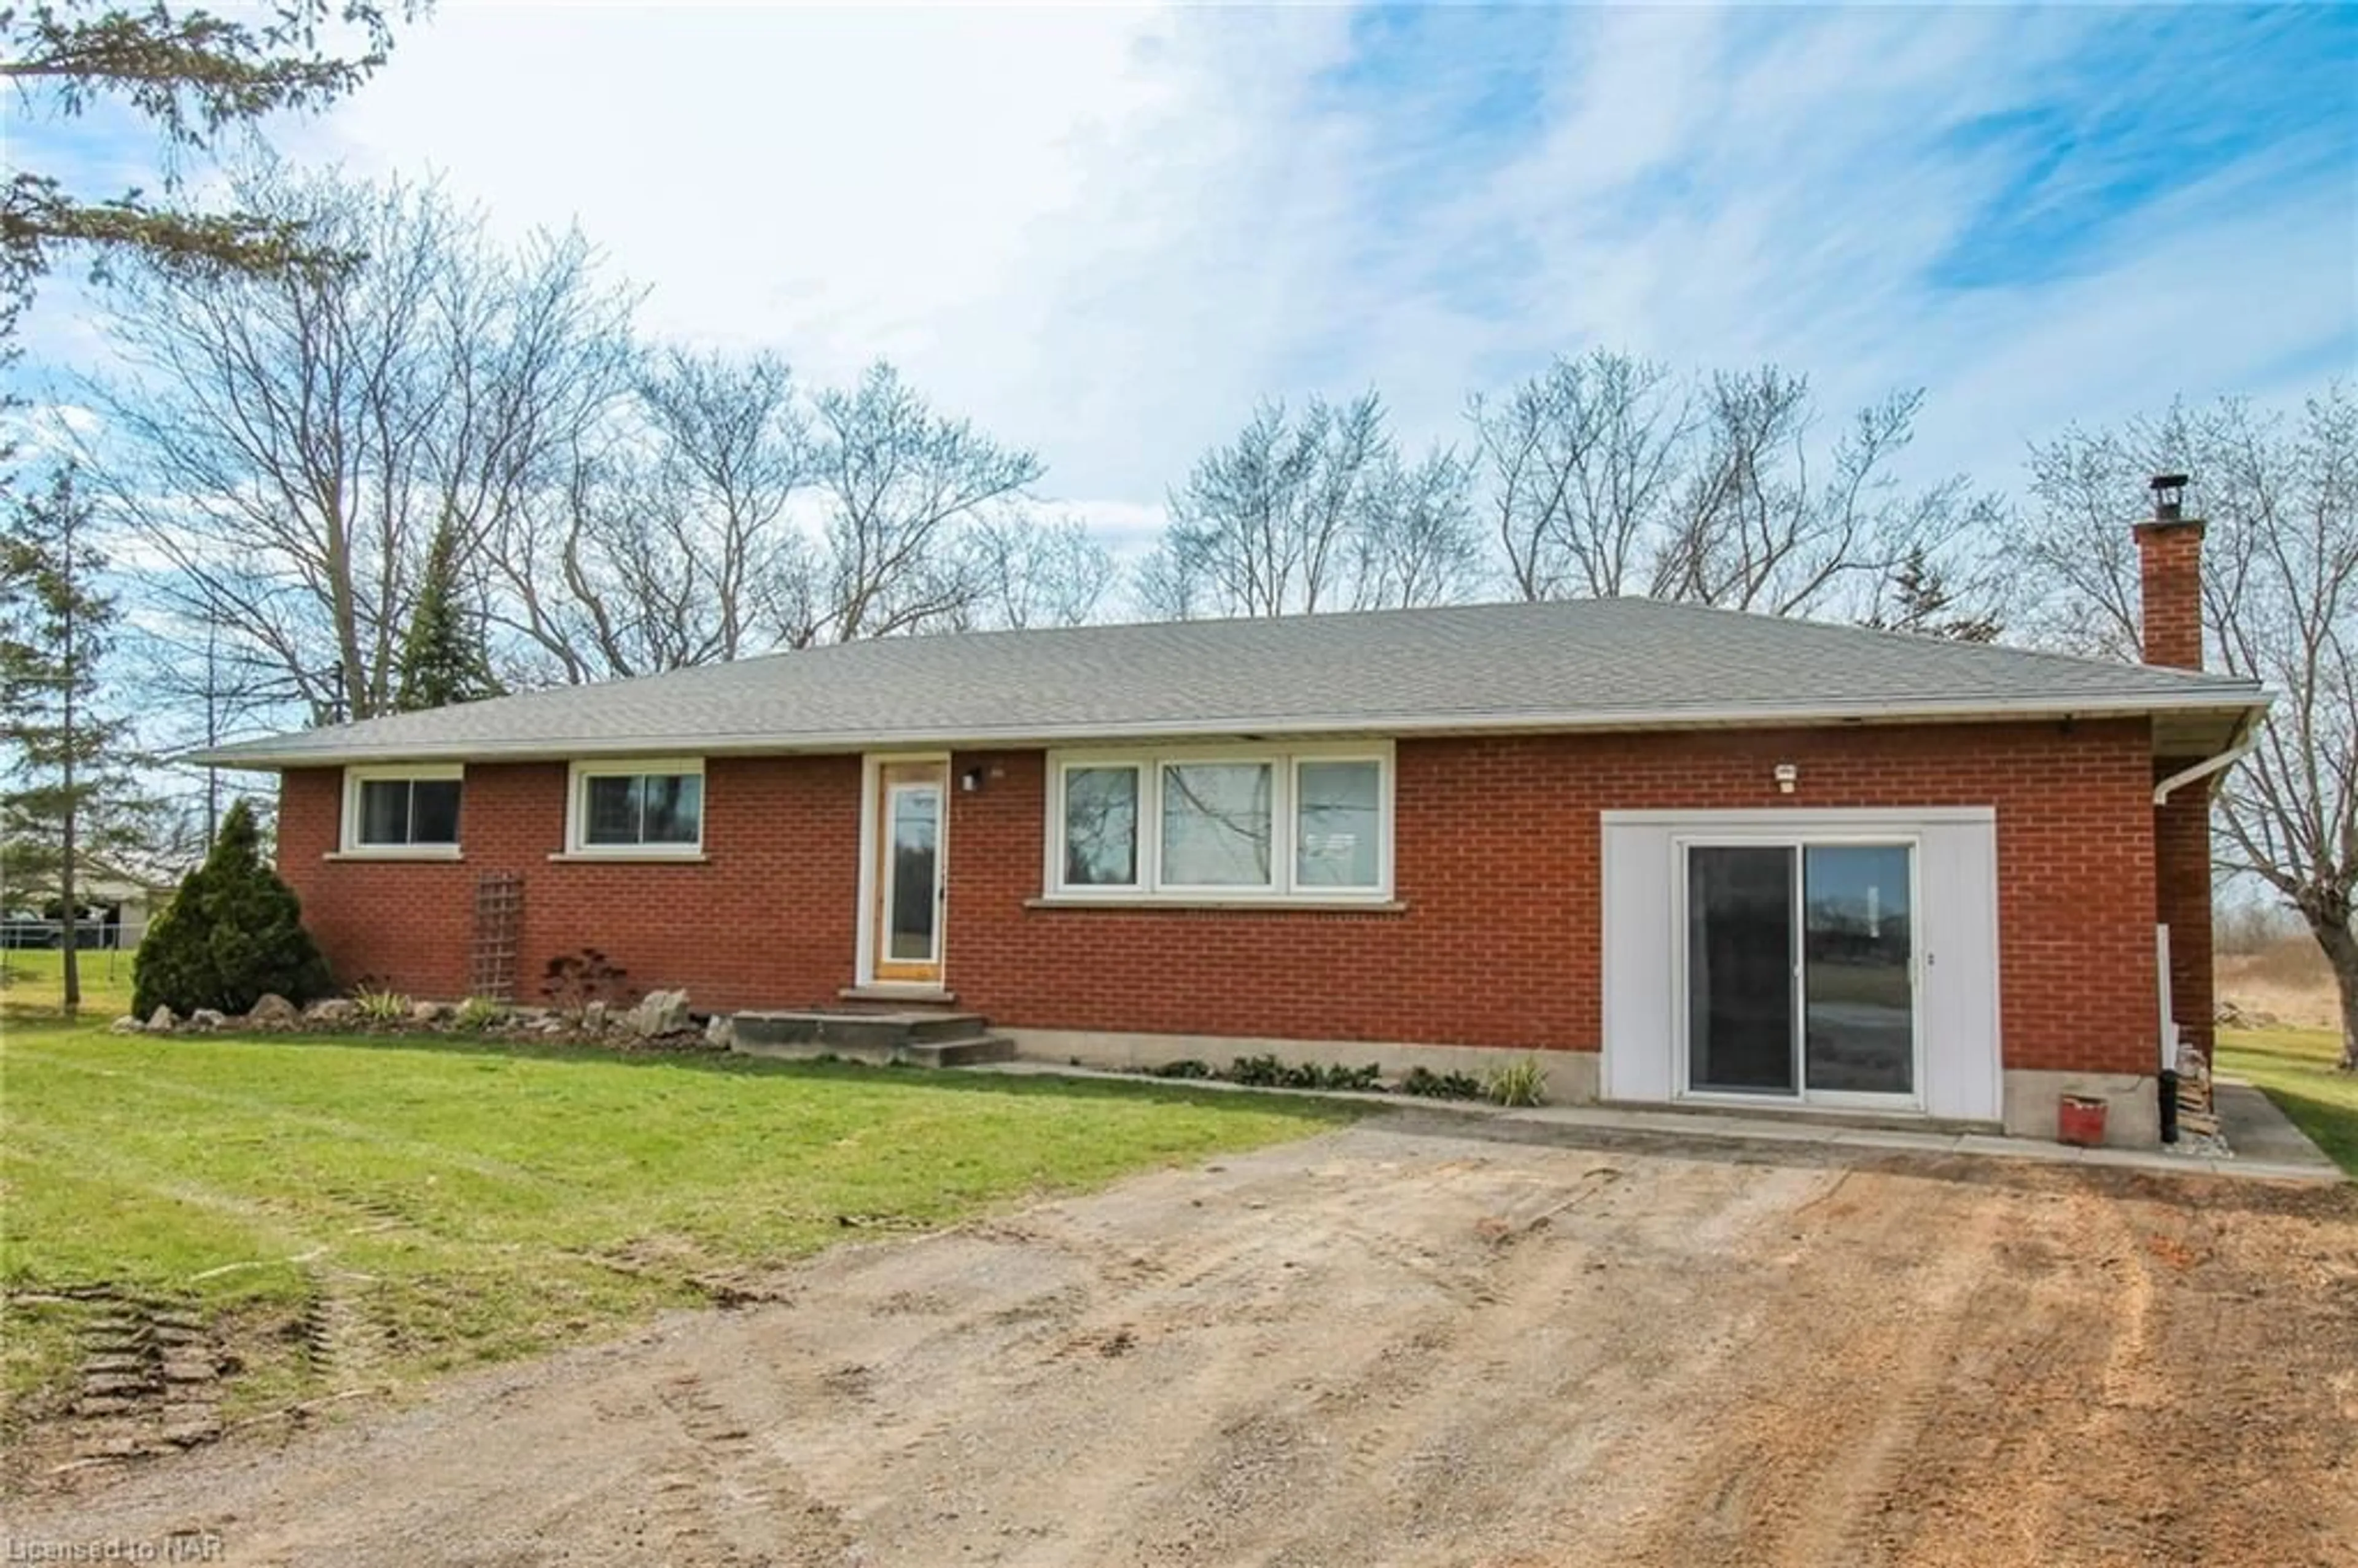 Home with brick exterior material for 3818 Elm St St, Port Colborne Ontario L3K 5V5